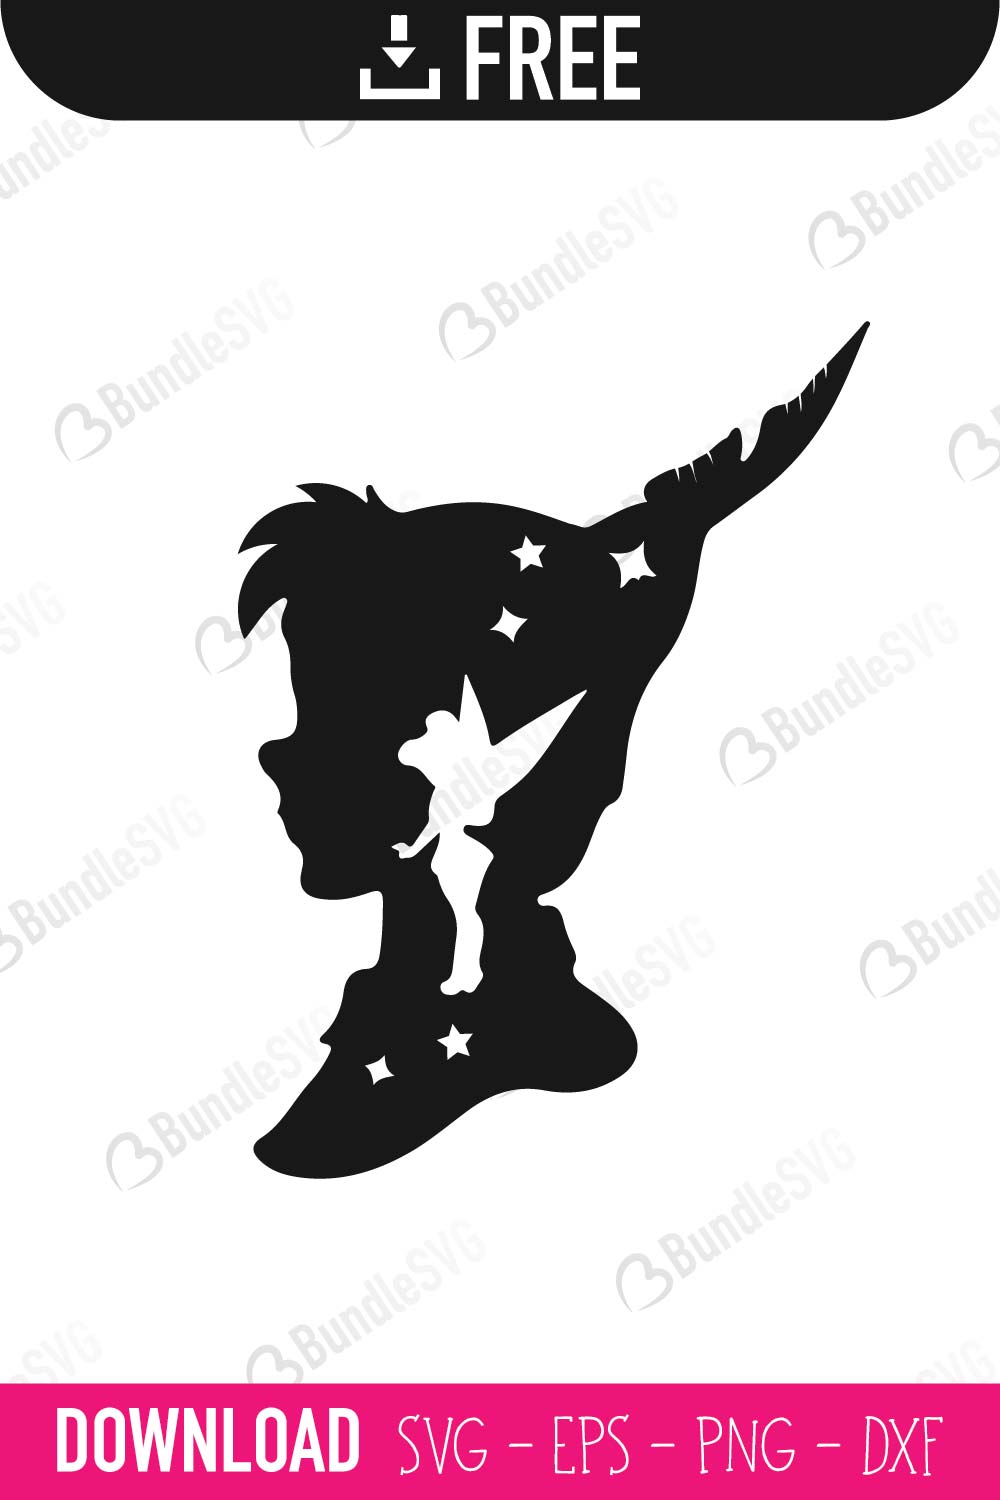 Peter Pan and Tinker Bell SVG Cut Files Free Download | BundleSVG.com